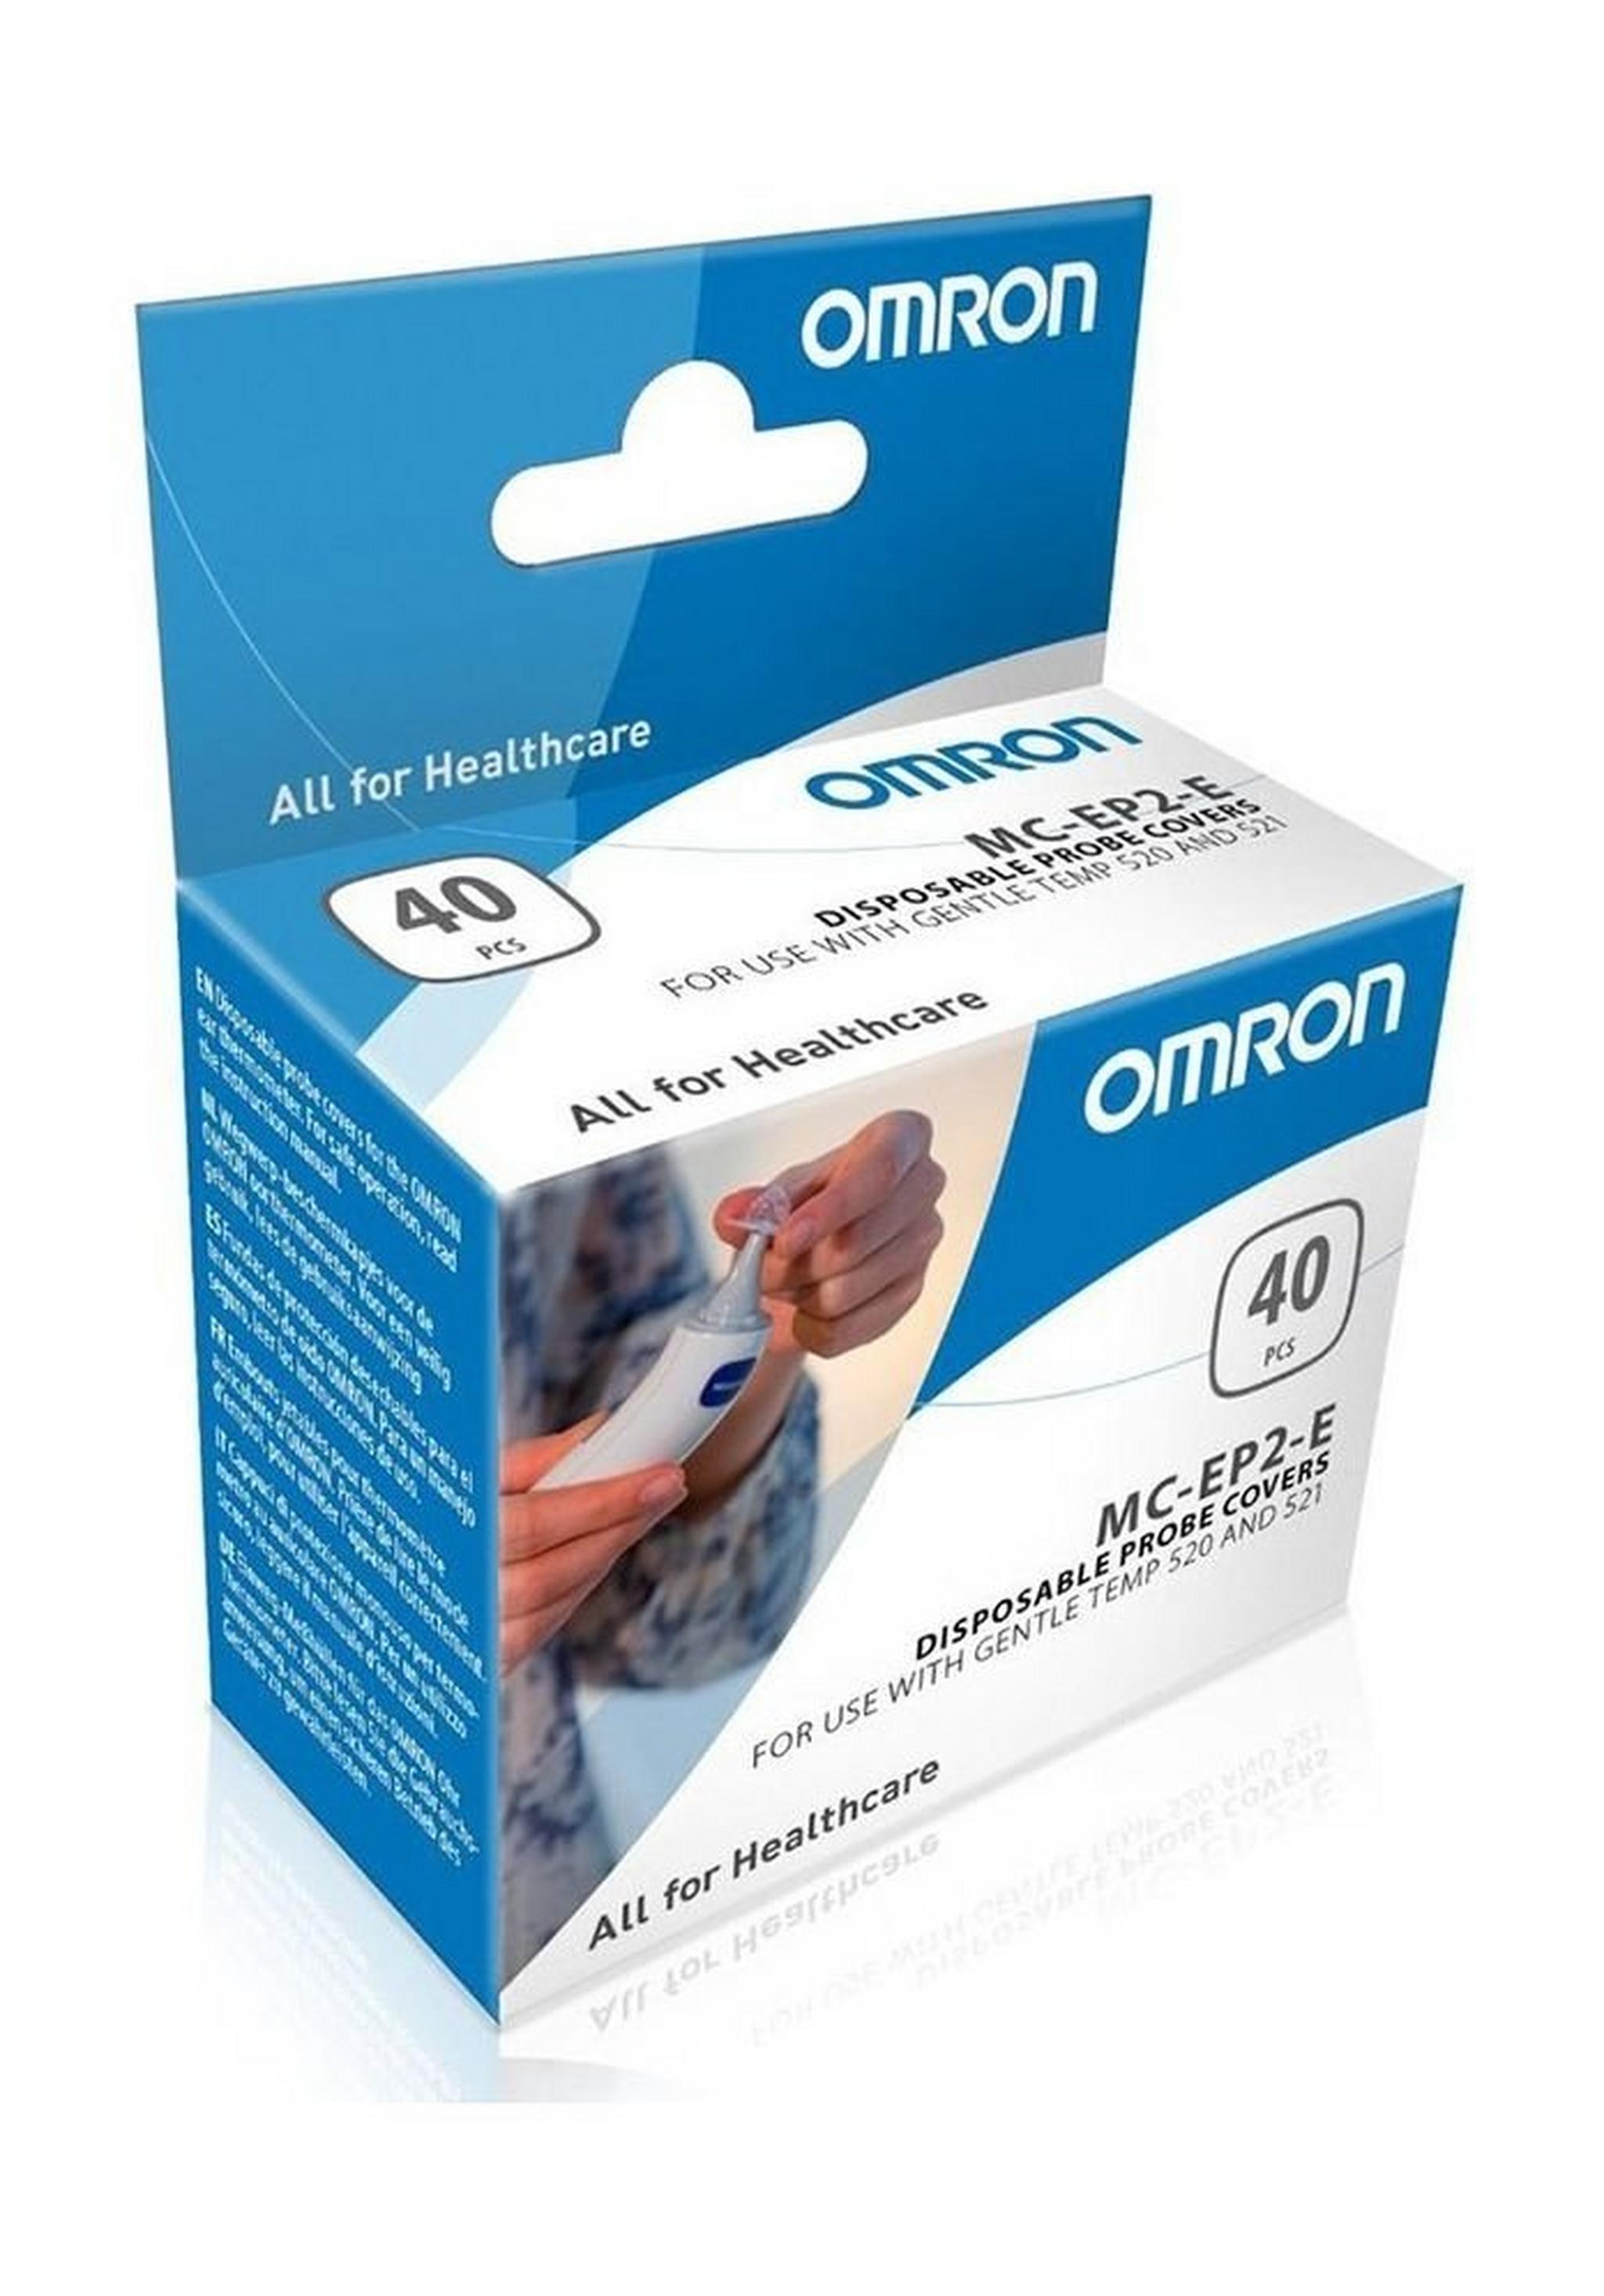 Omron Disposable Probe Covers 40pcs - MC-EP2-E